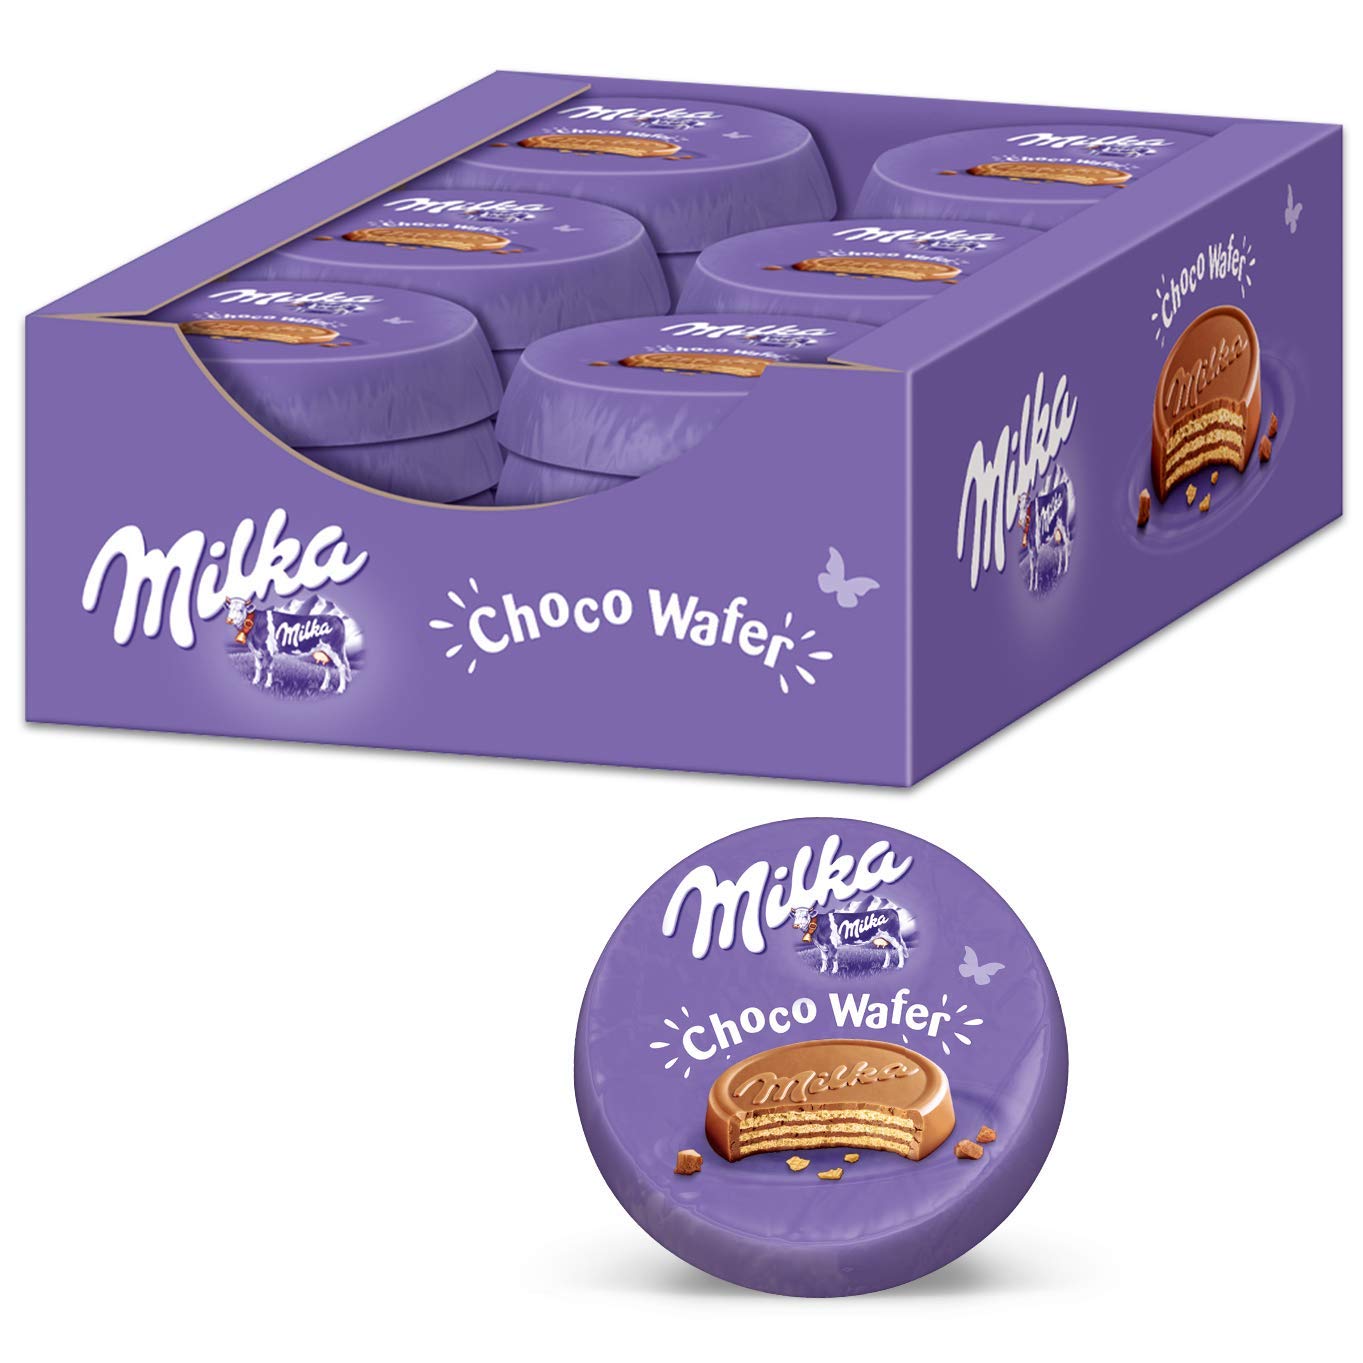 Milka Choco Wafer 30g (UK)